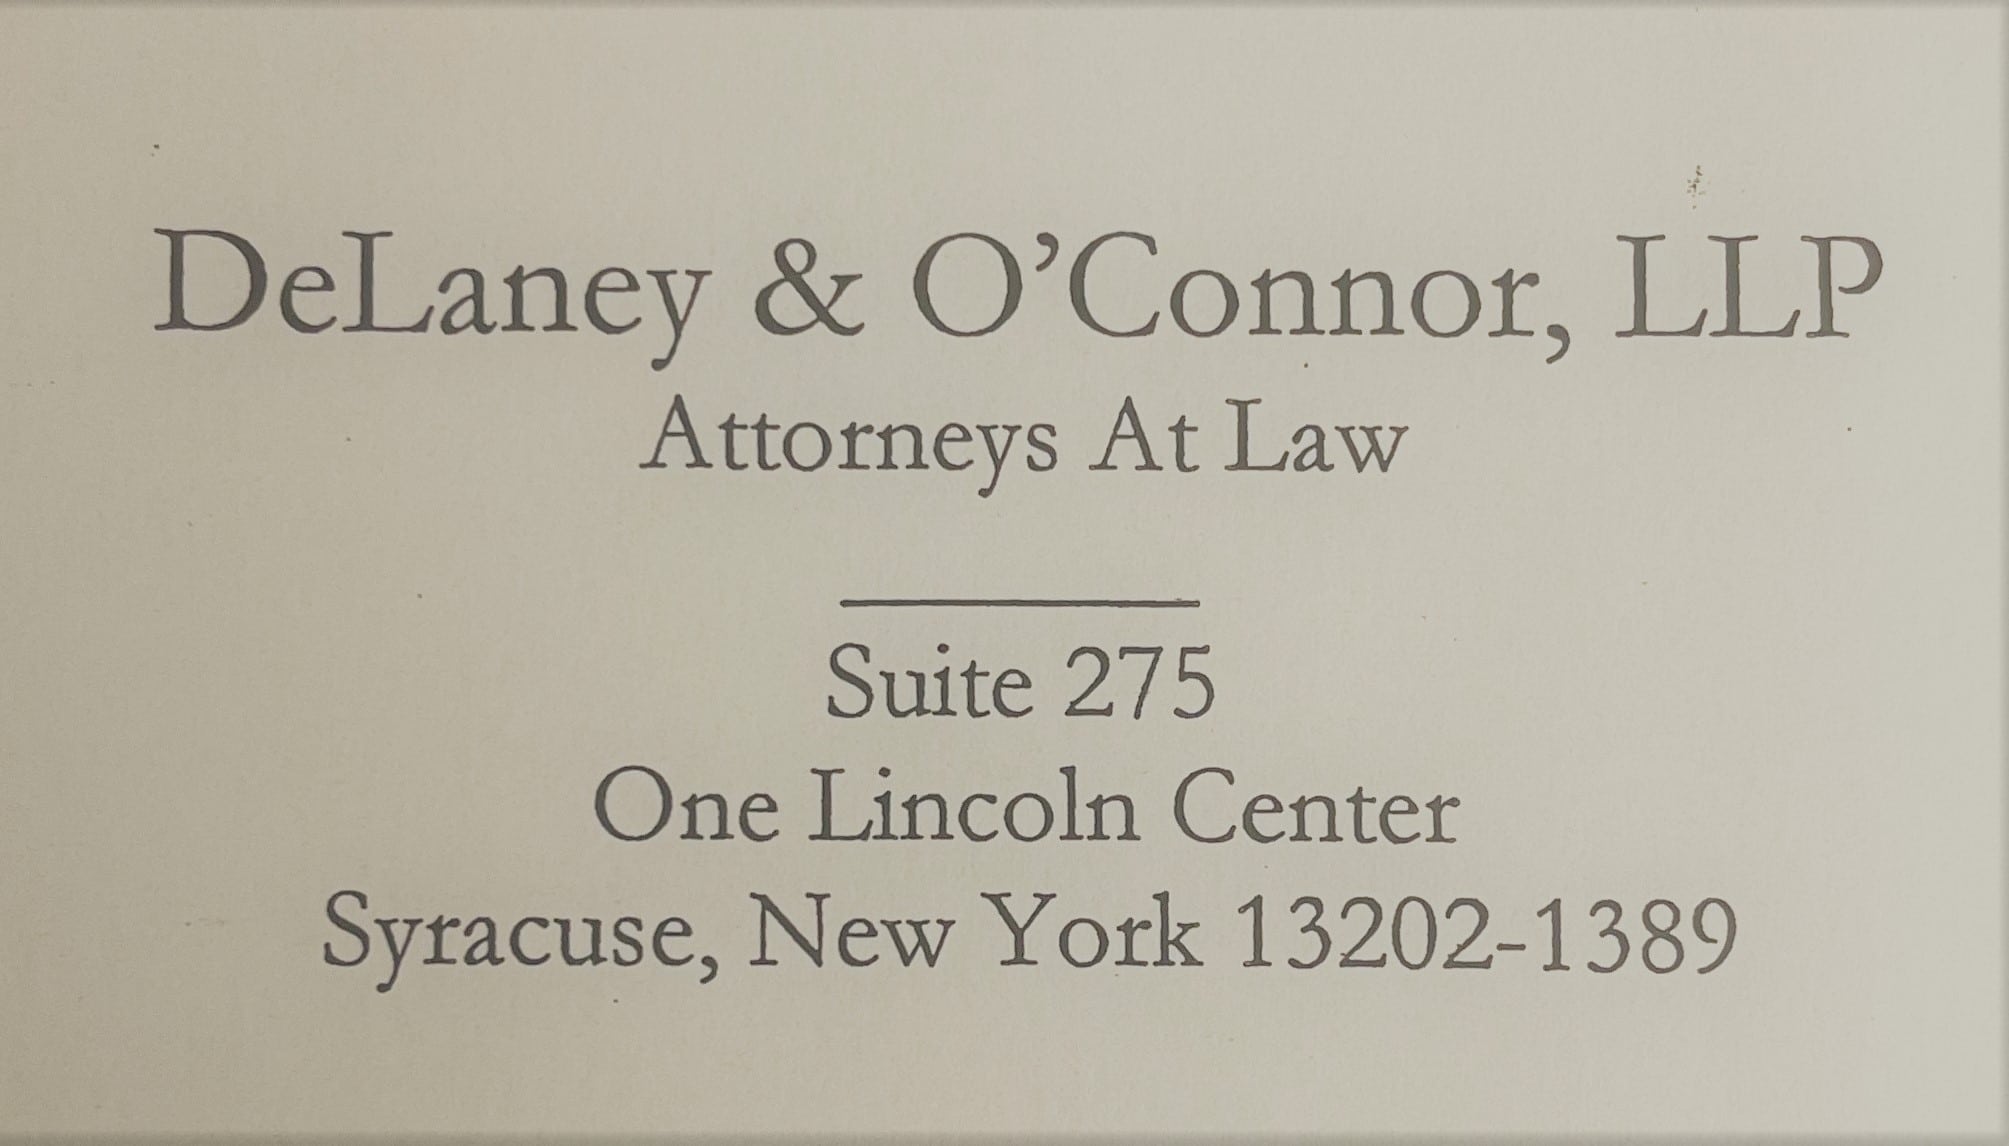 DeLaney & O'Connor business card